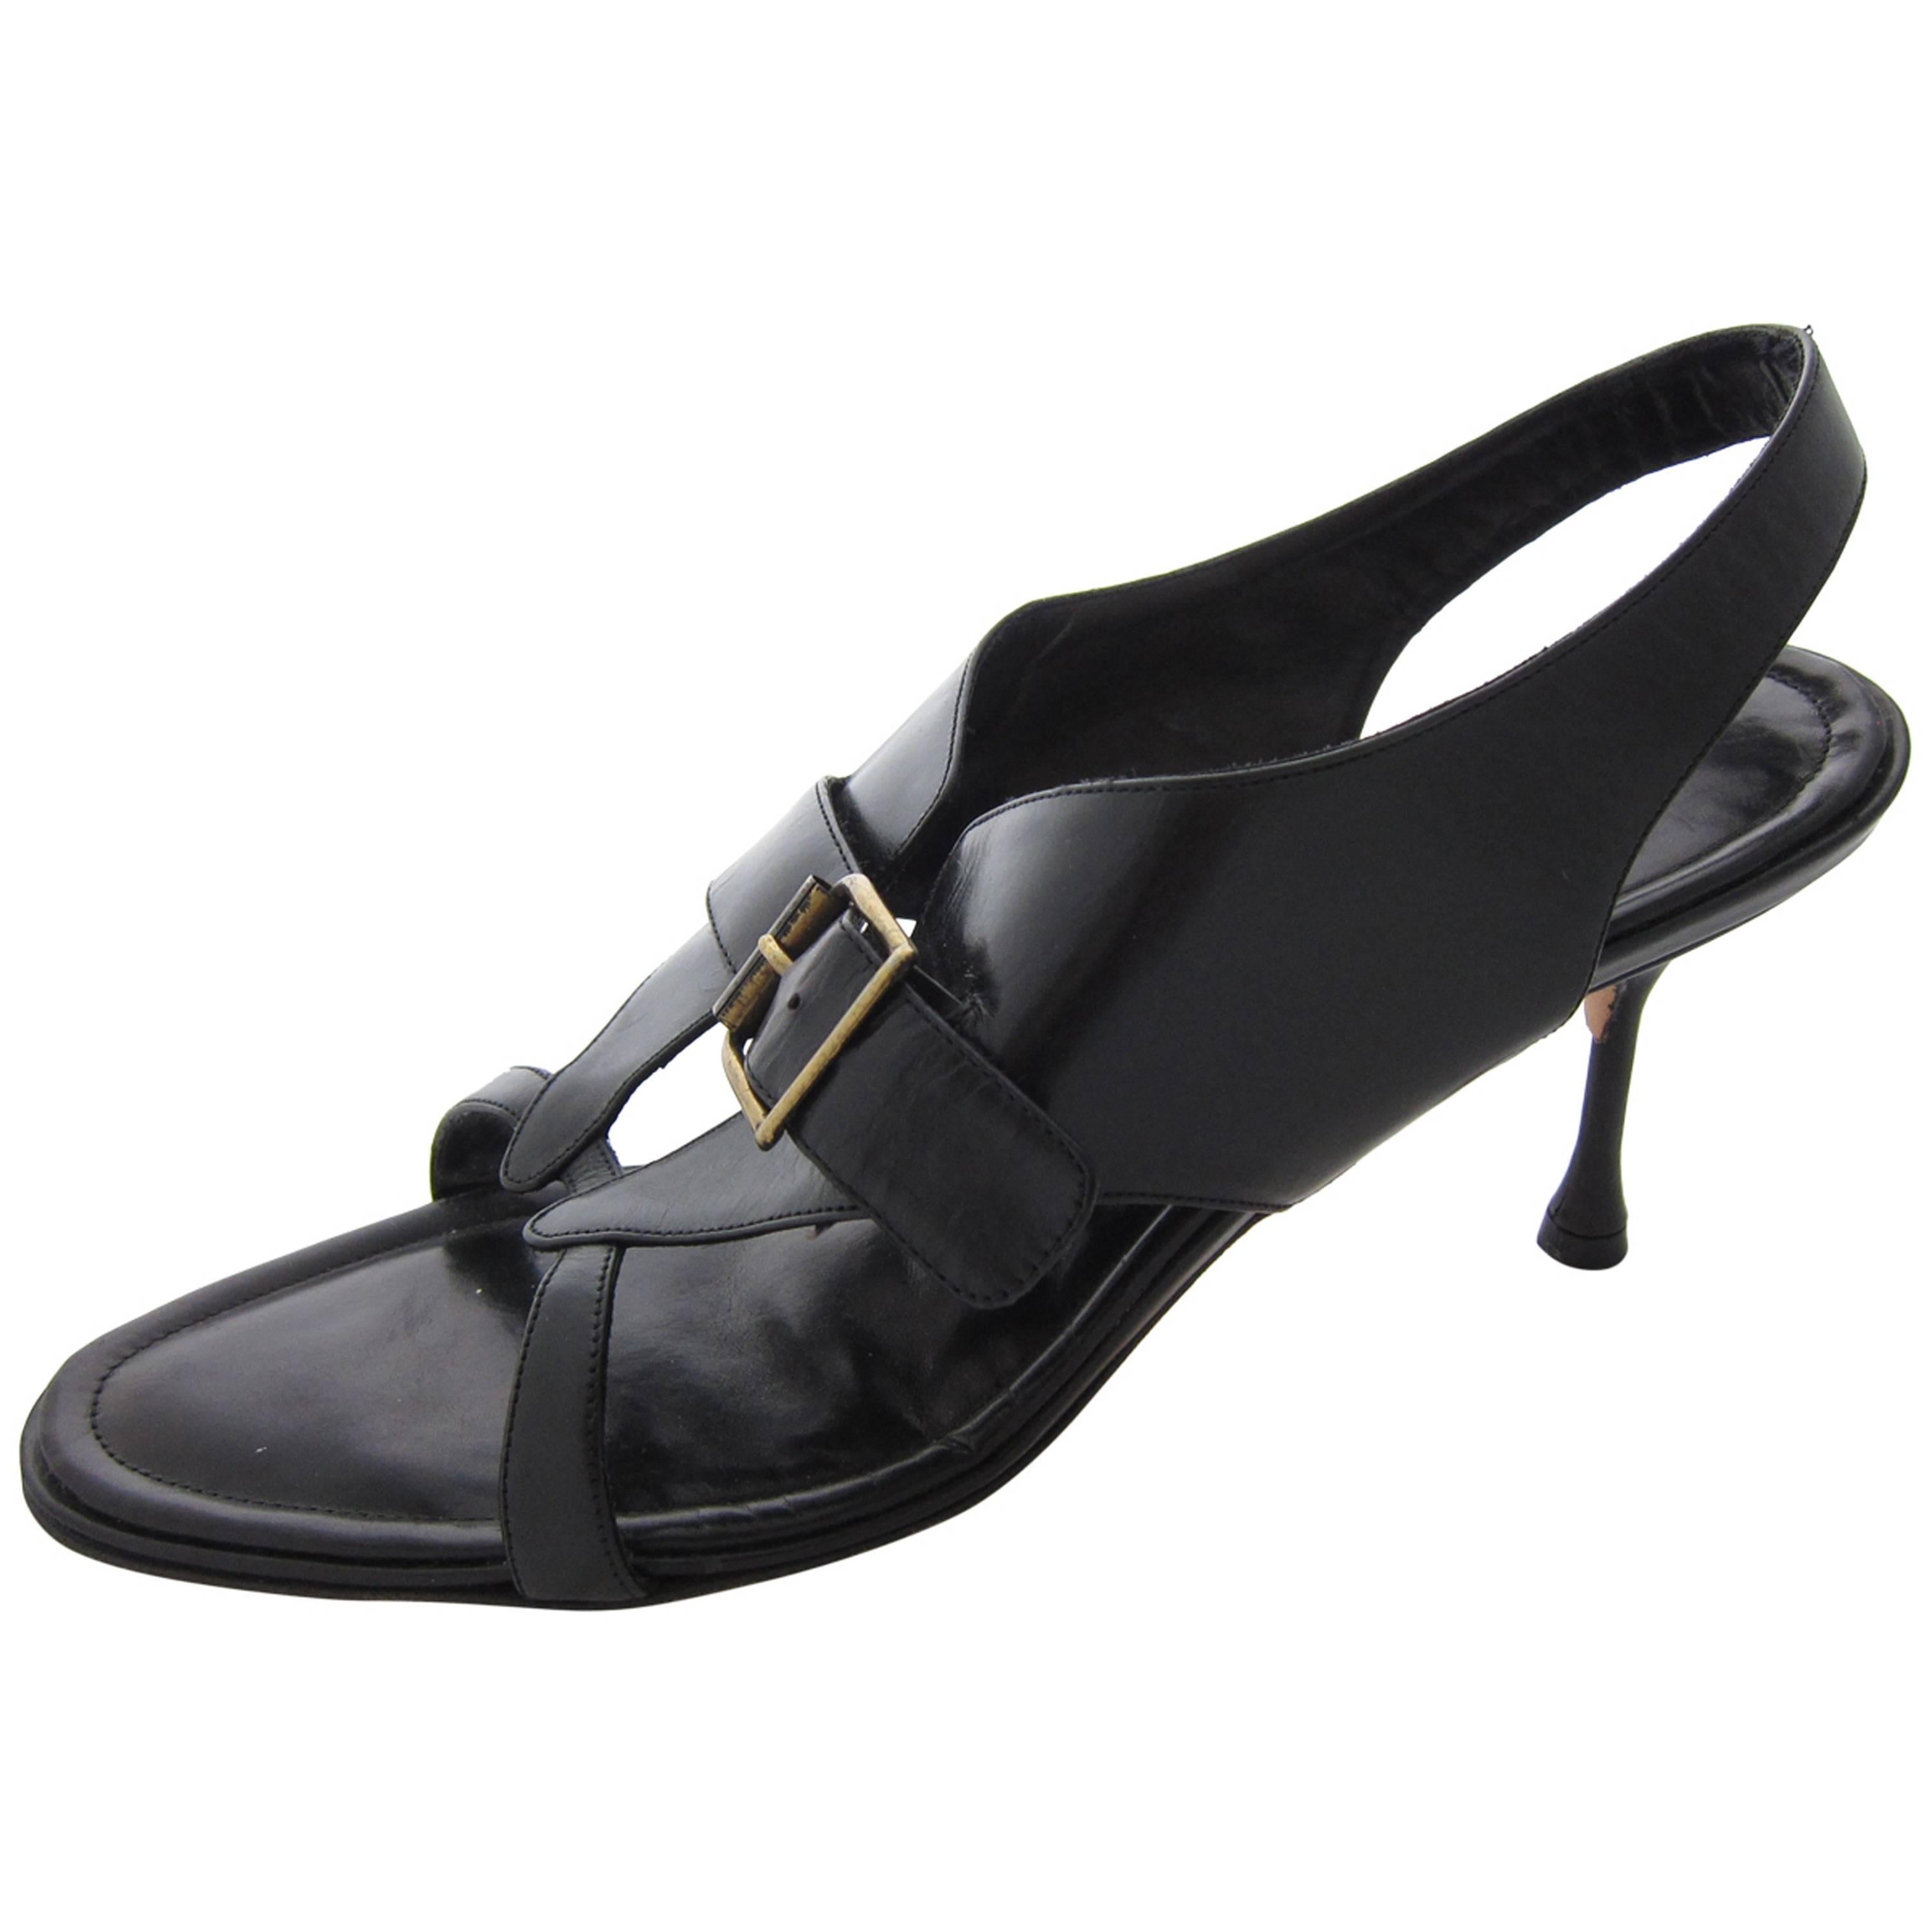 Manolo Blahnik Black Leather Sandals Size 7 For Sale